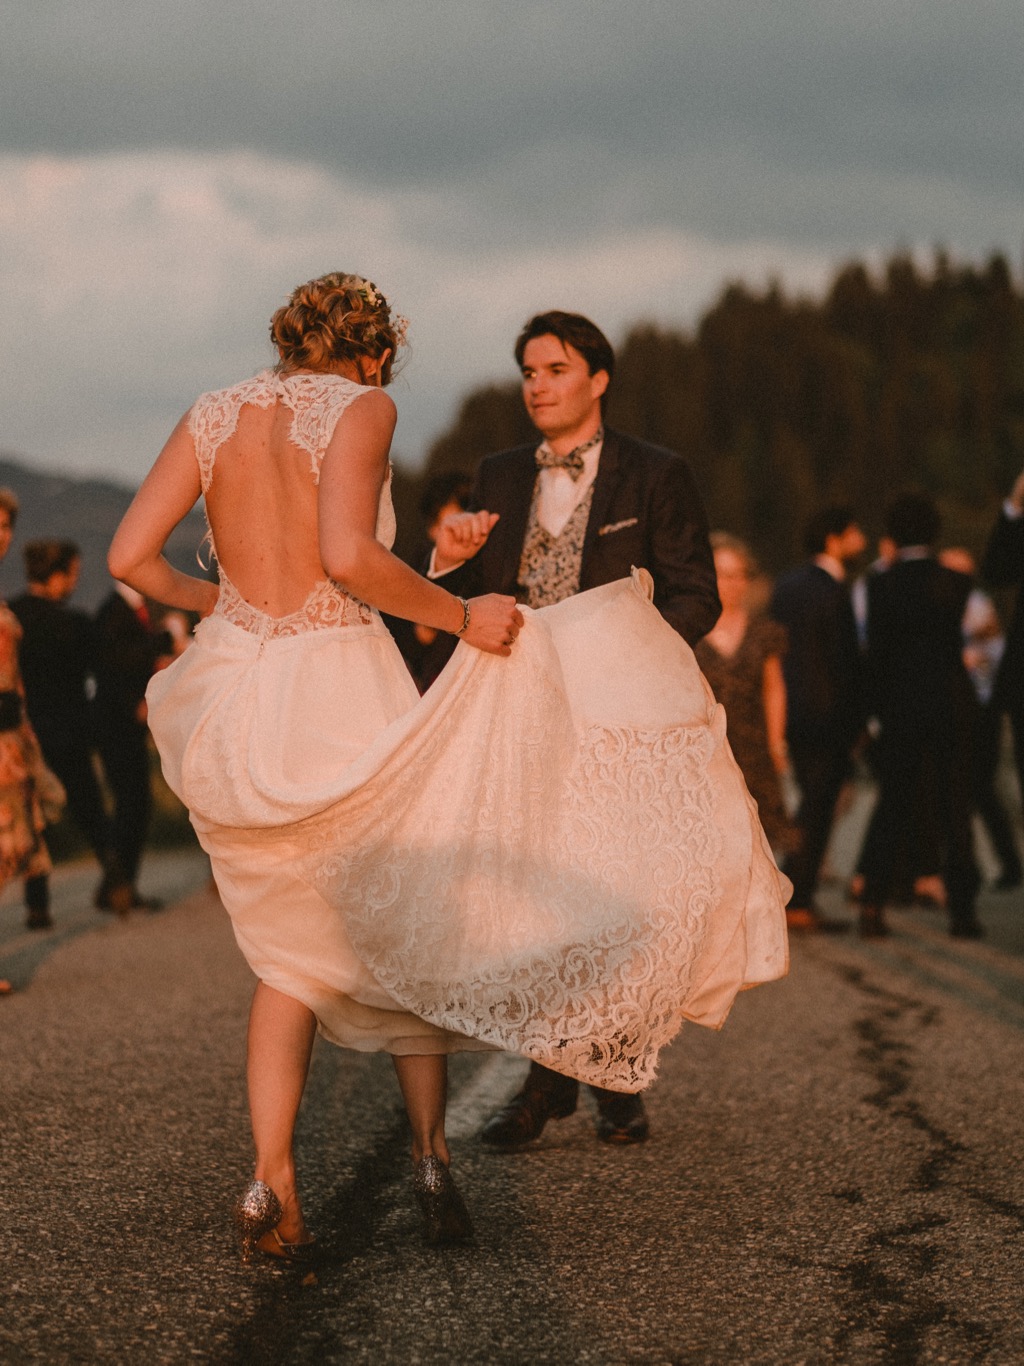 Mariés en train de dancer - Photographe : Gerald Mattel